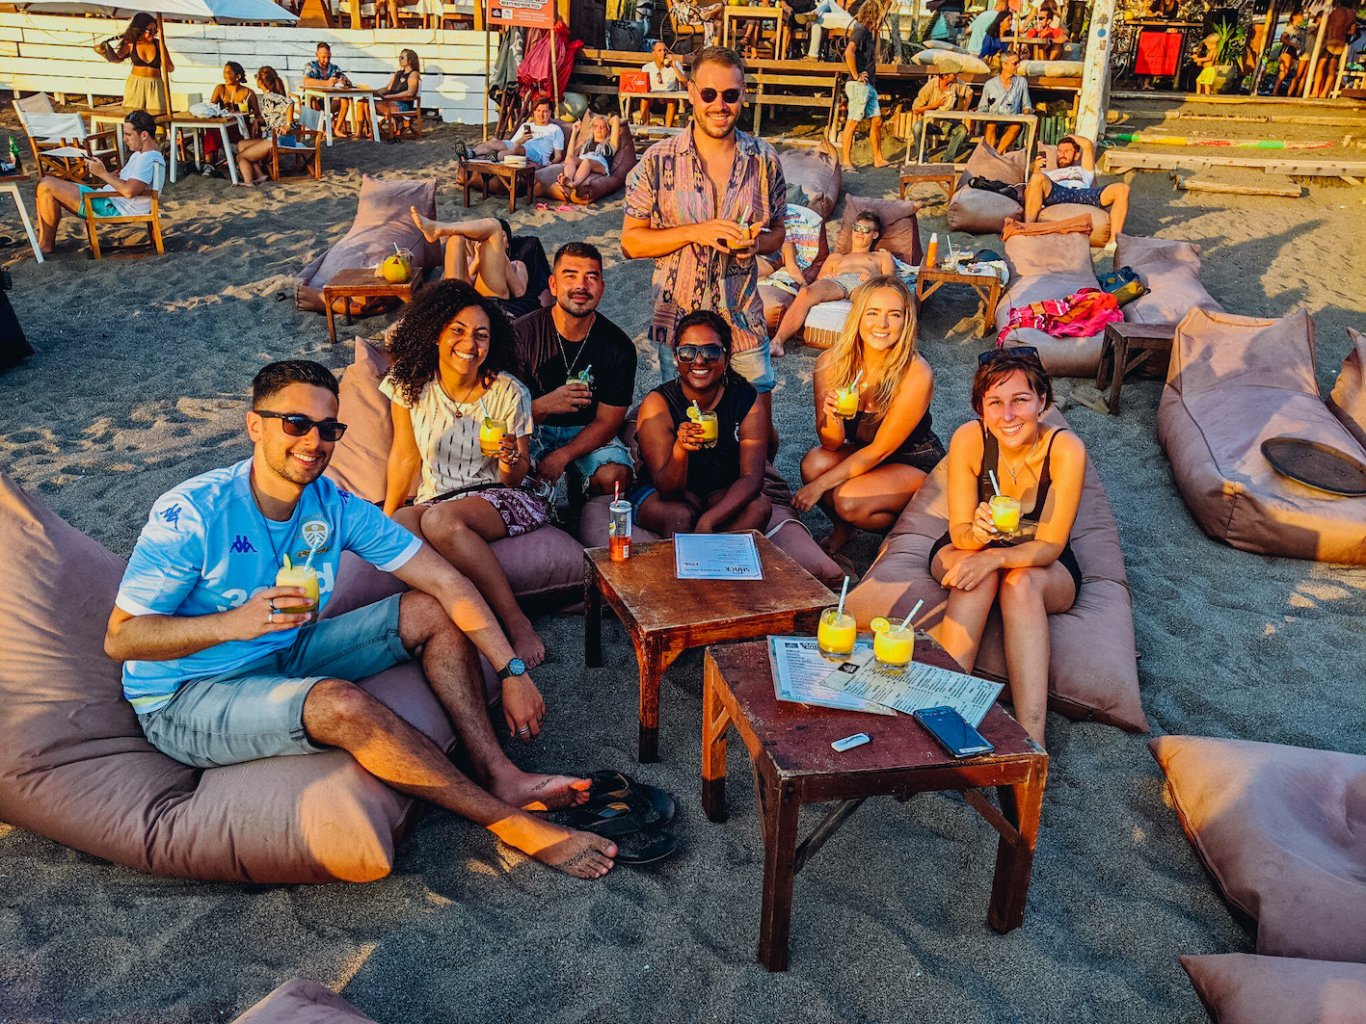 A group at the beach enjoying drinks in Canggu Bali, Indonesia 